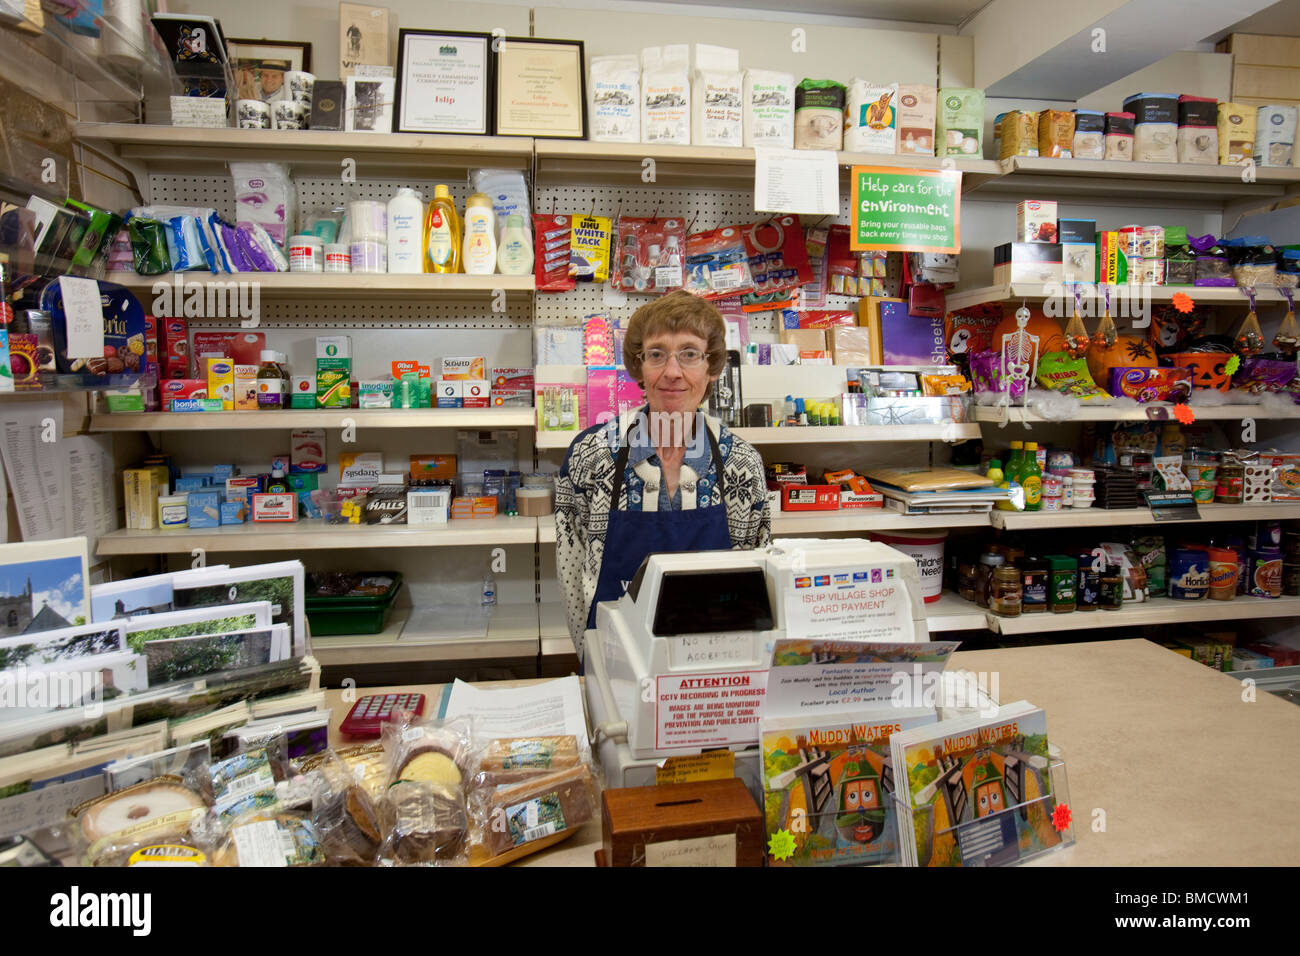 Maralynn Smith who runs Islip Village shop based in the Islip Village hall, Oxfordshire Stock Photo